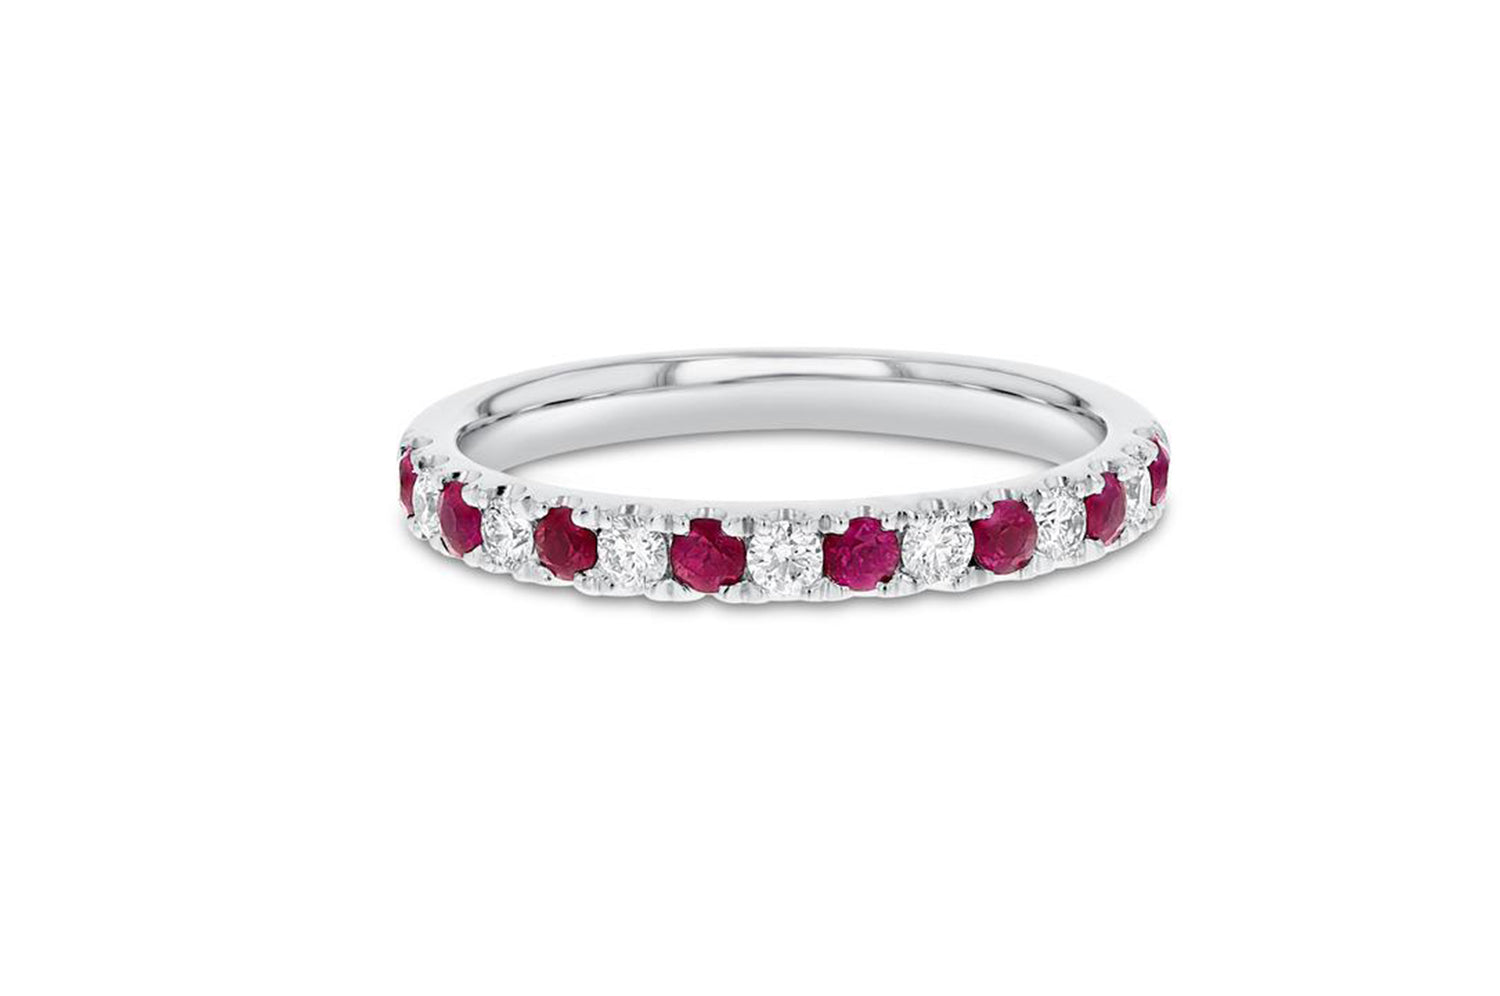 'Ruby' 18K White Gold Diamond & Gemstone Ring, 0.58 Carats